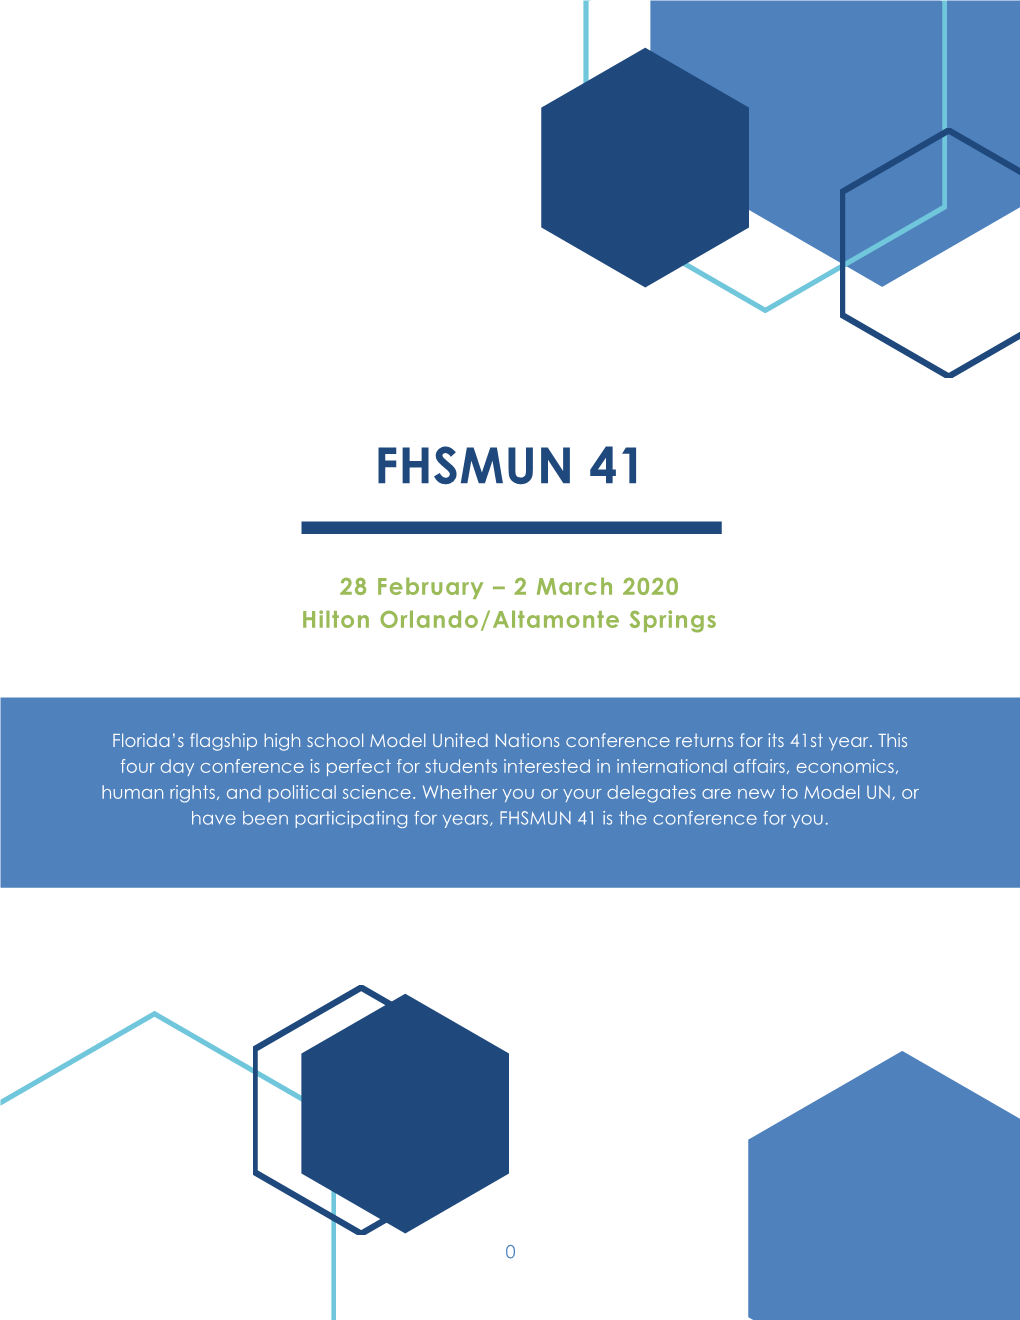 FHSMUN 41 Conference Statement • • •